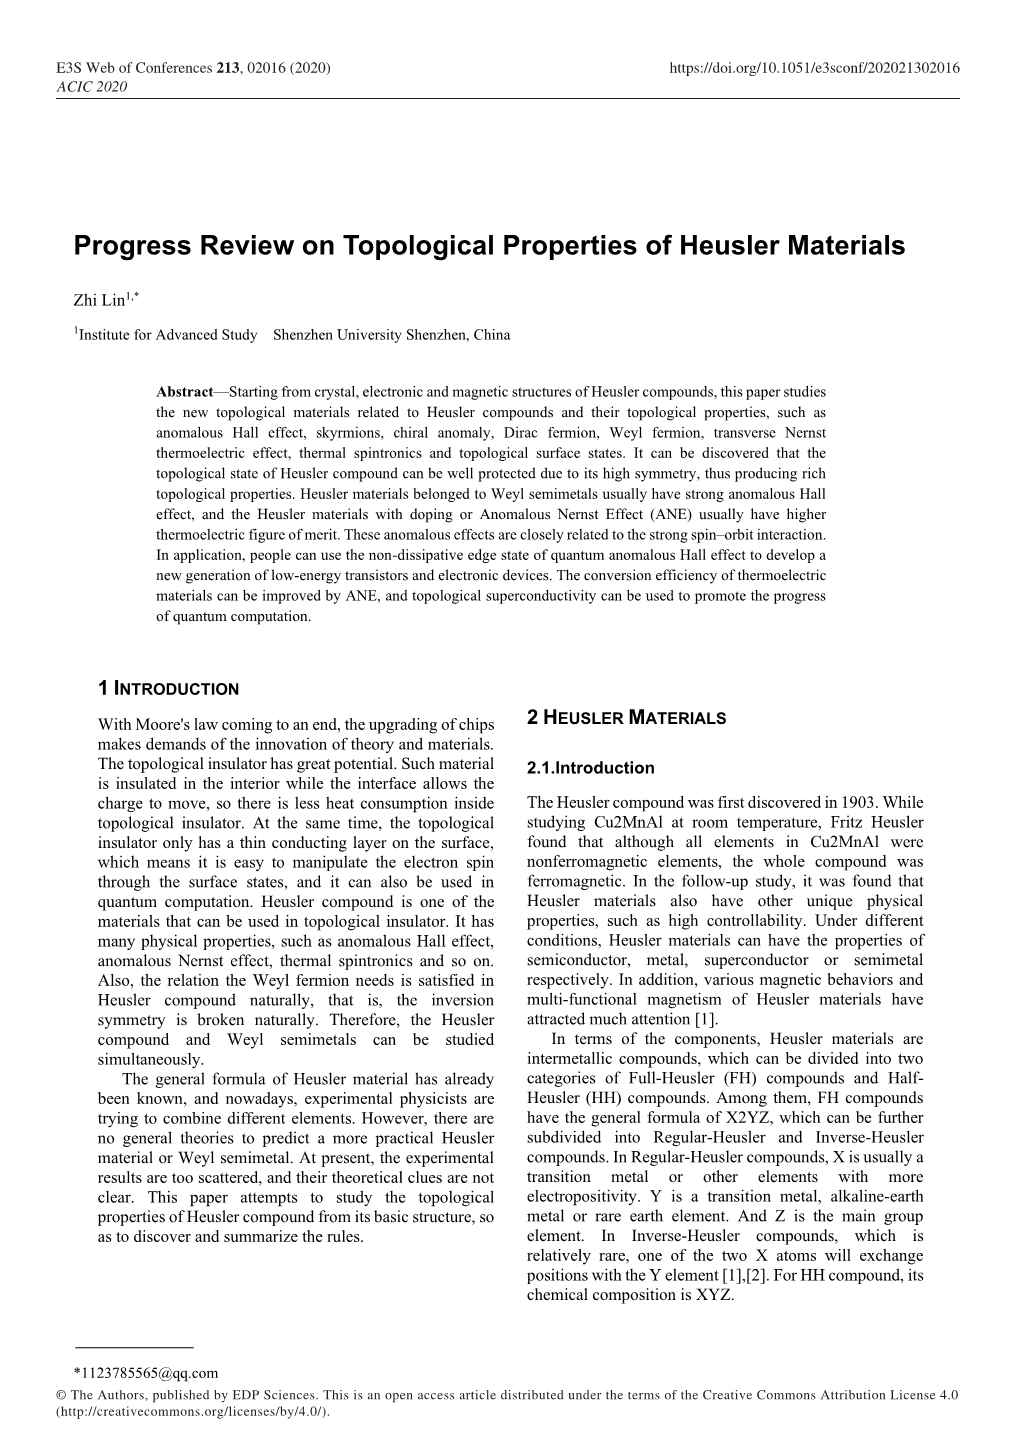 Progress Review on Topological Properties of Heusler Materials